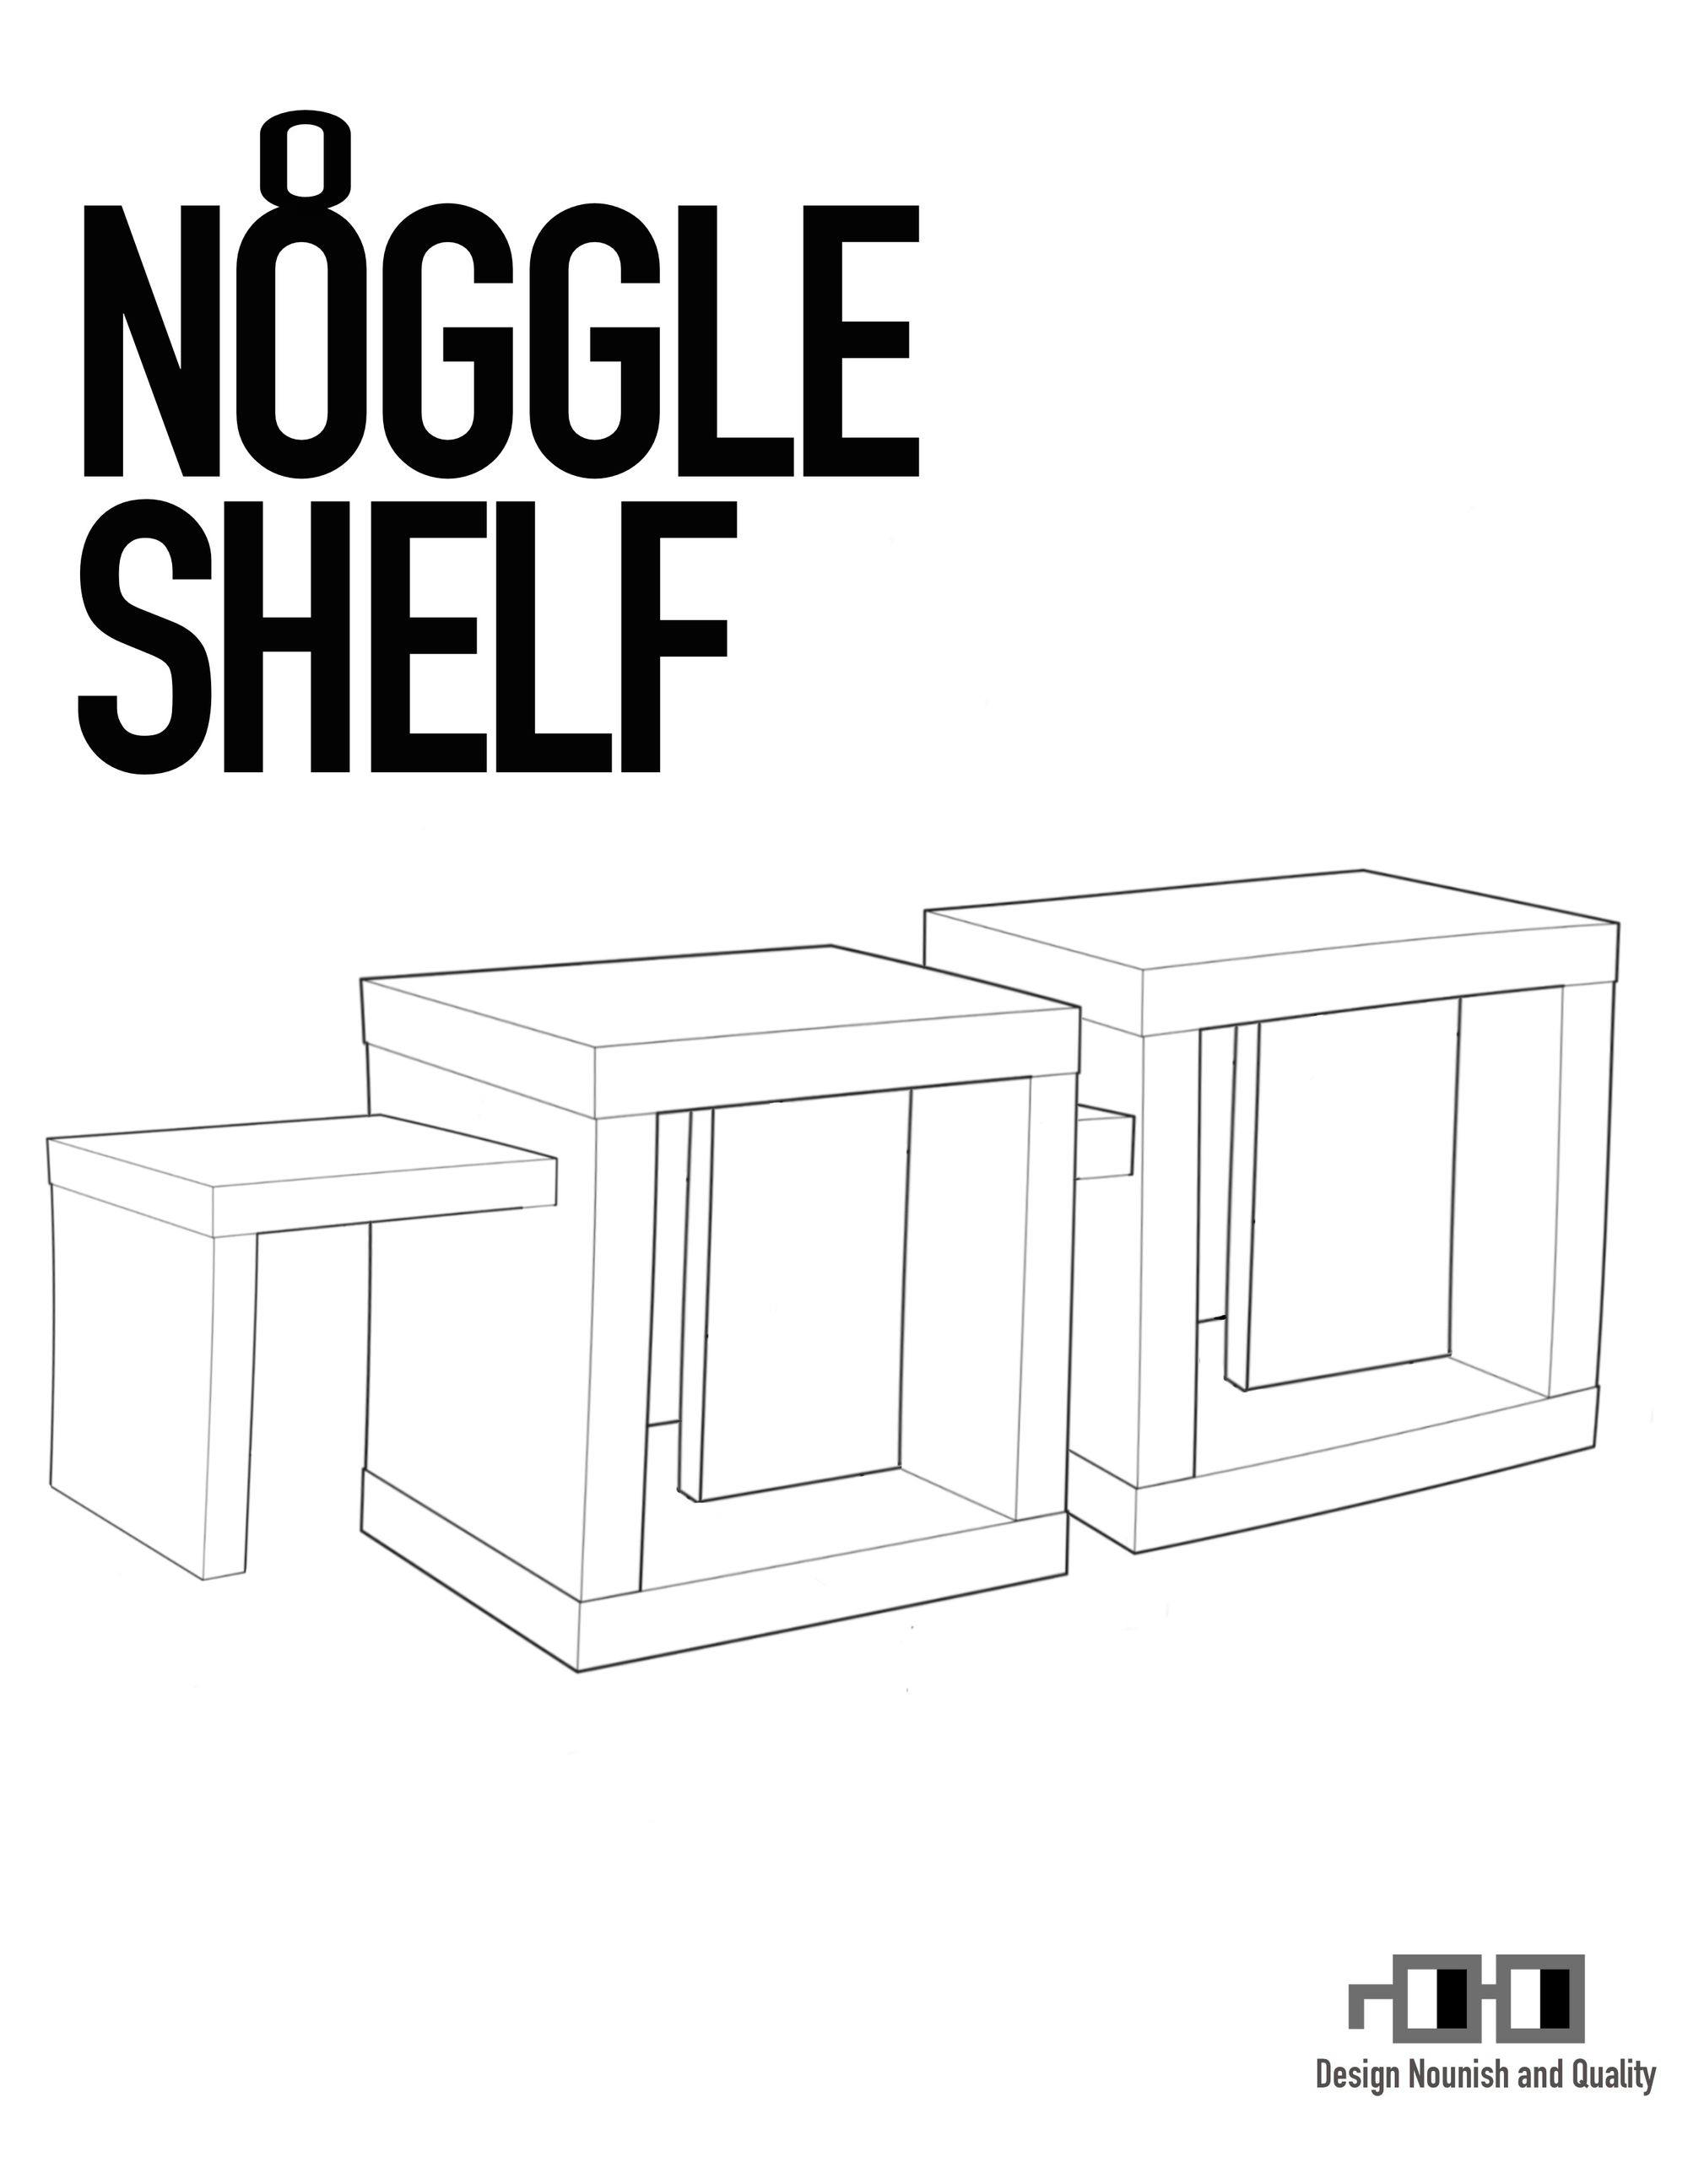 Noggle Shelf.jpeg